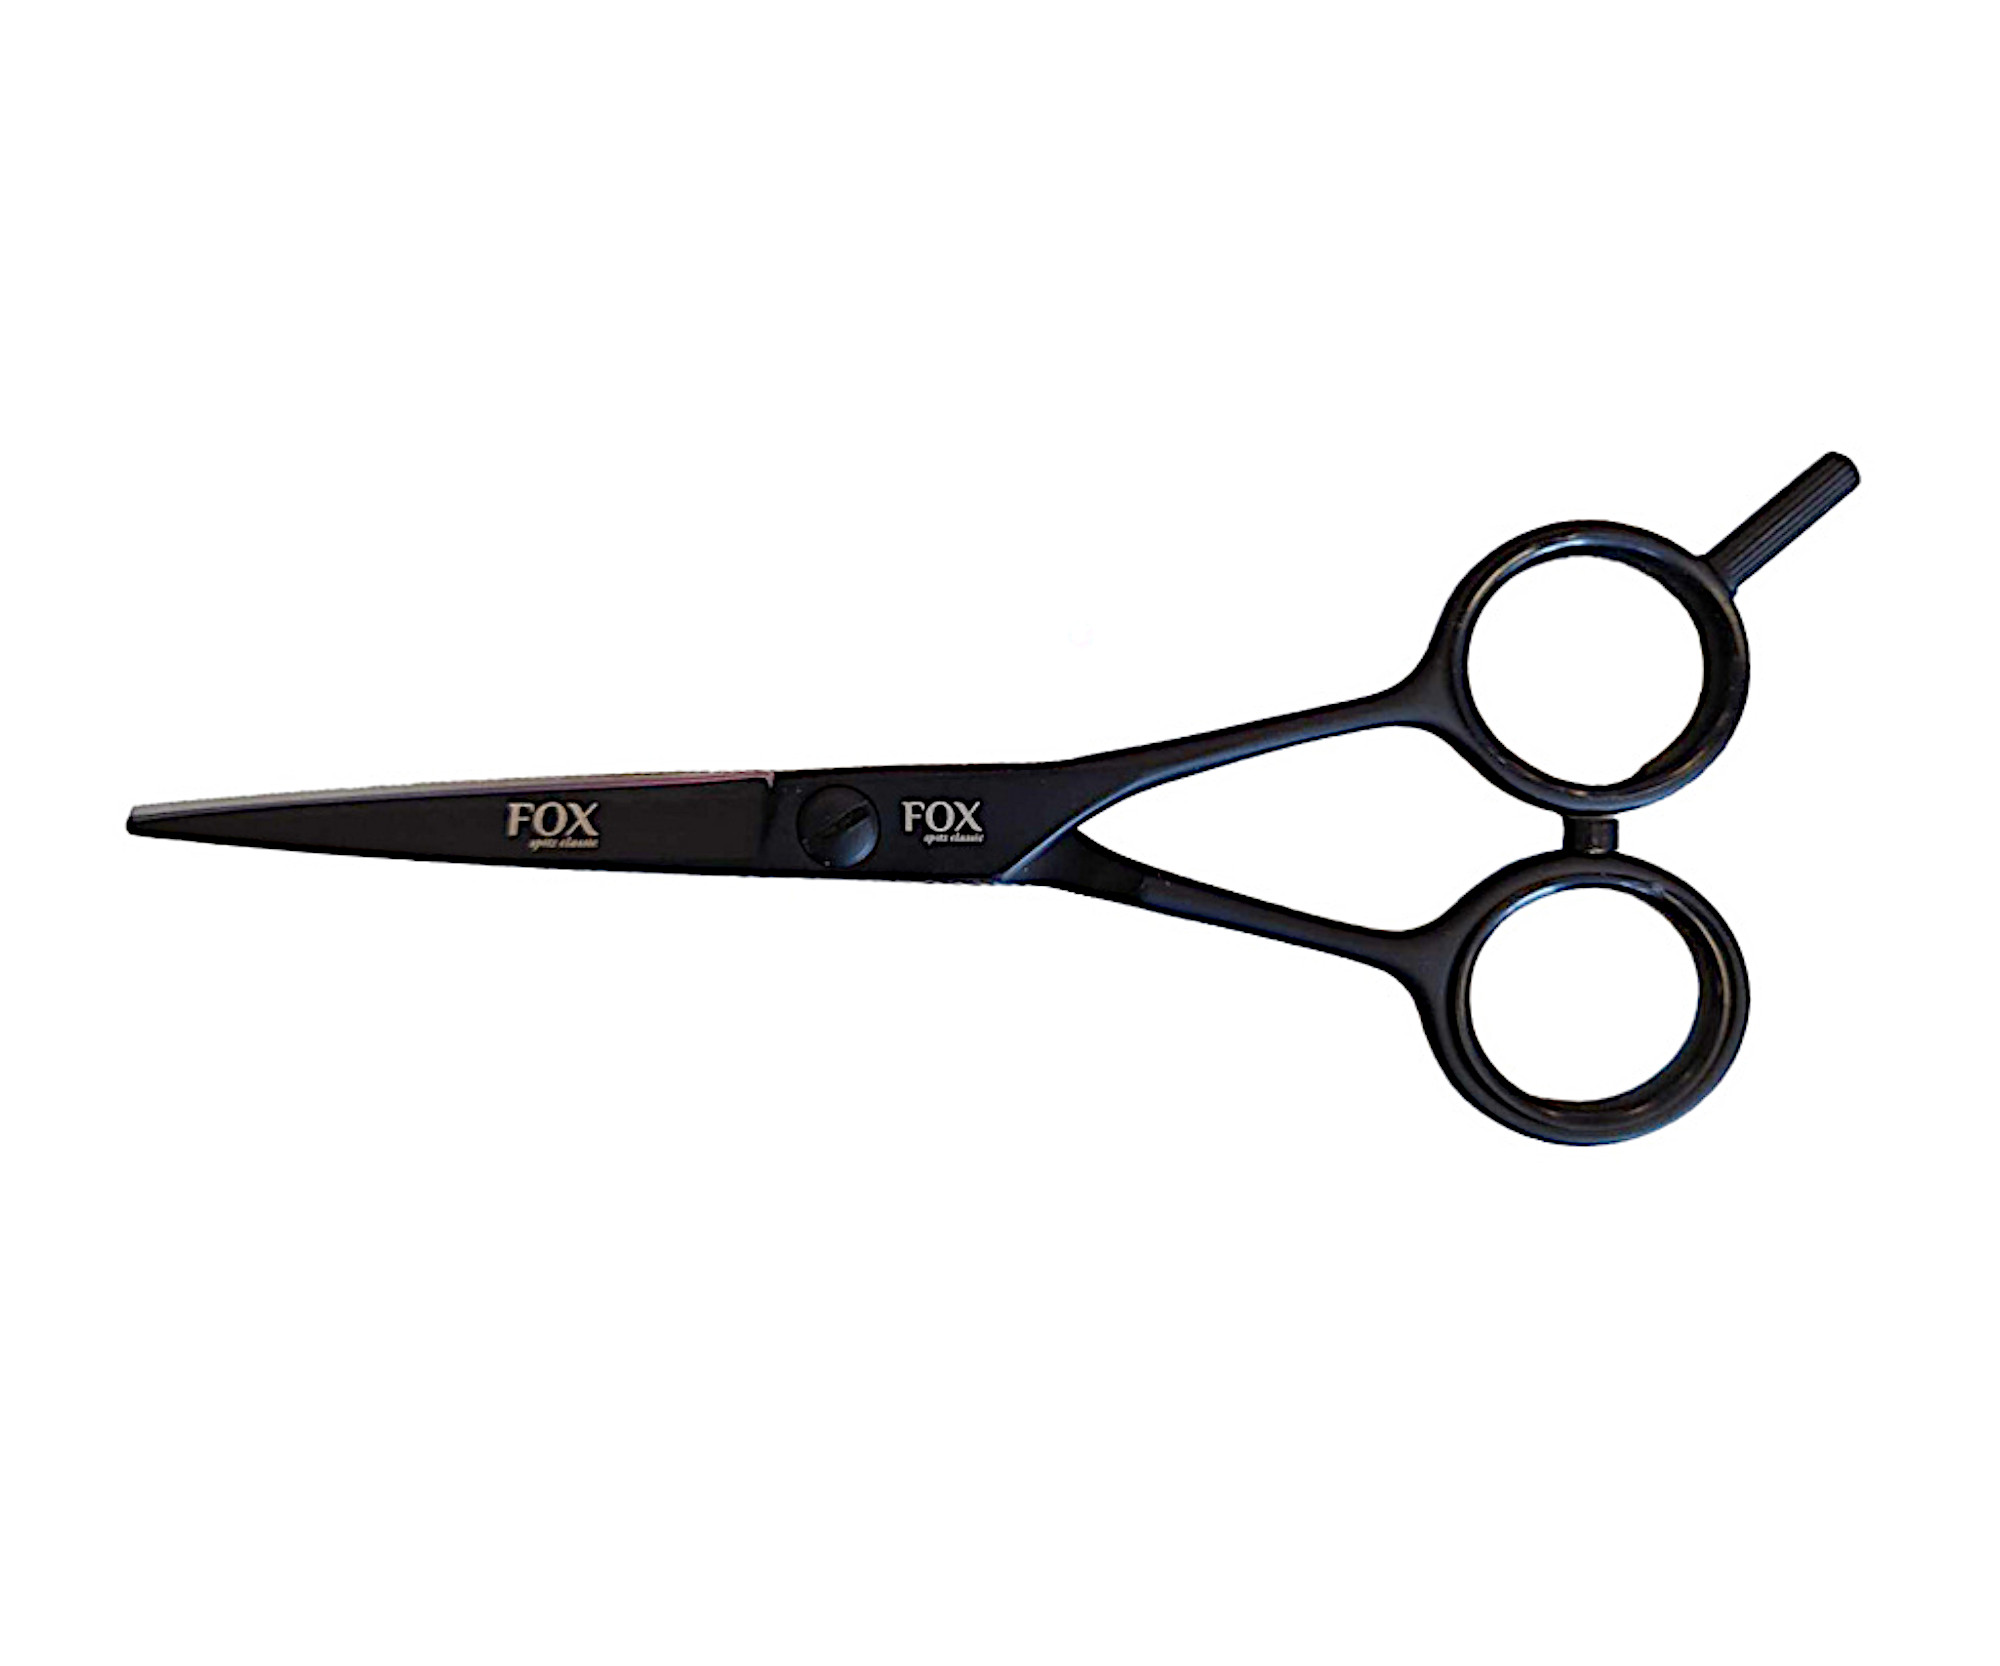 Kadeřnické nůžky Fox Spitz Premium 5,5" - černé (1509563) + dárek zdarma